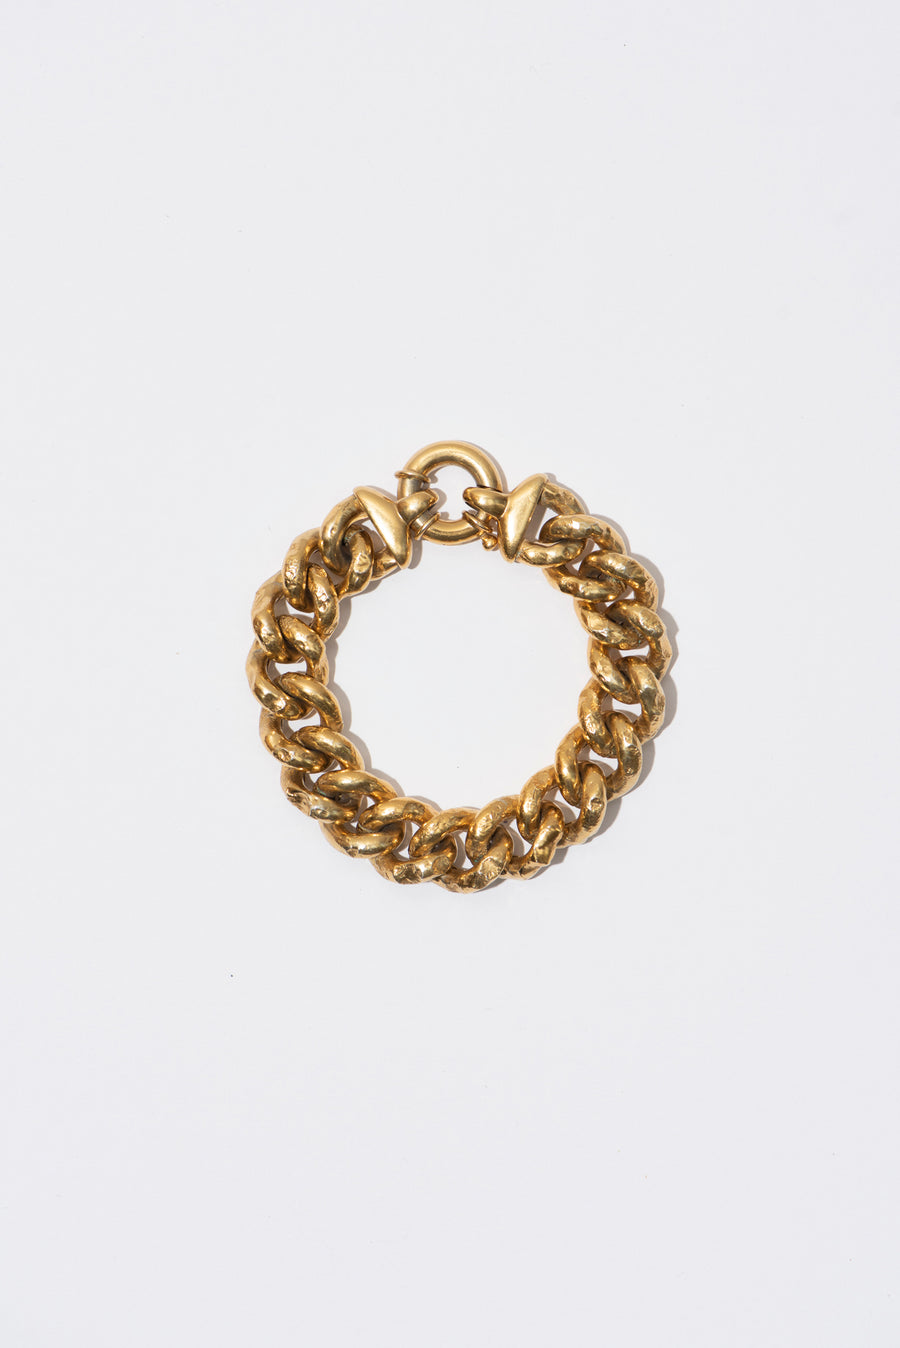 The Chain Bracelet